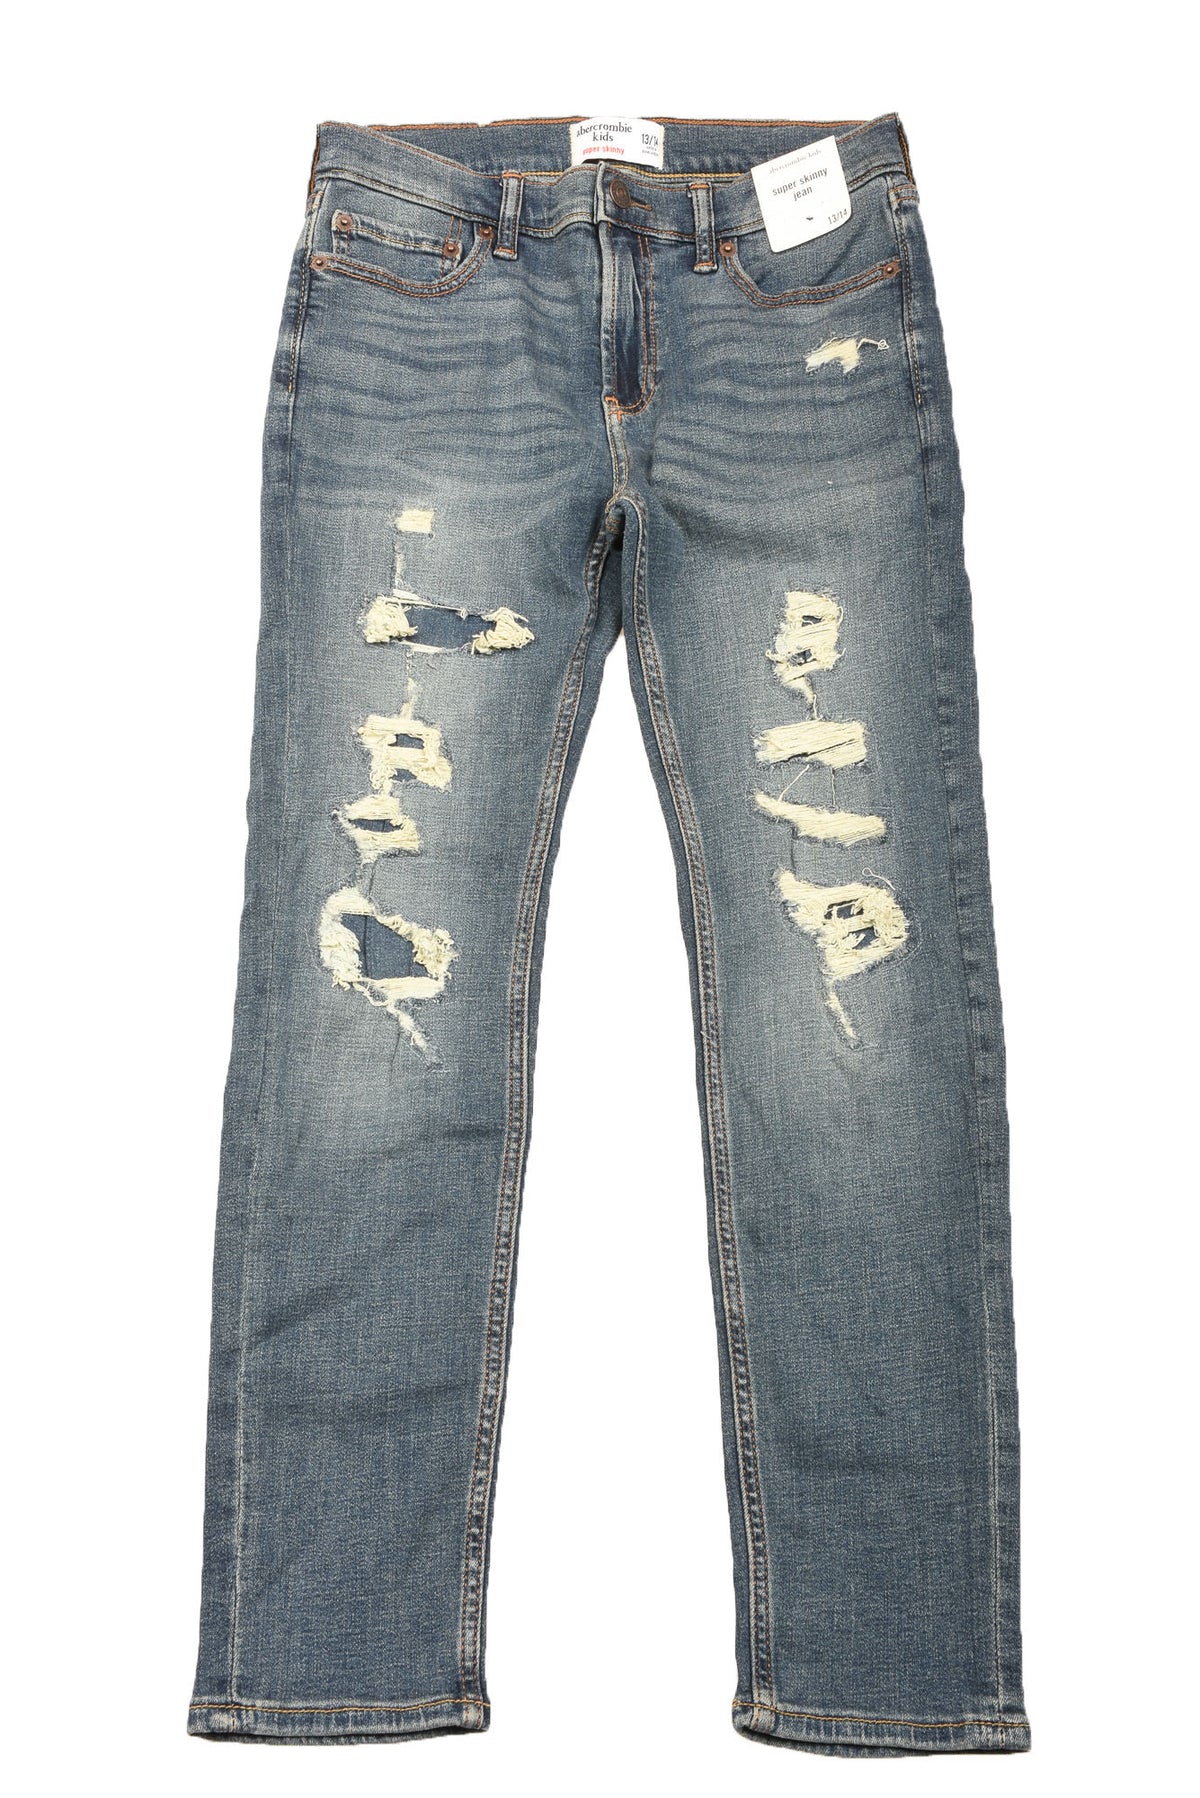 Abercrombie Kids Size 13/14 Girl&#39;s Jeans